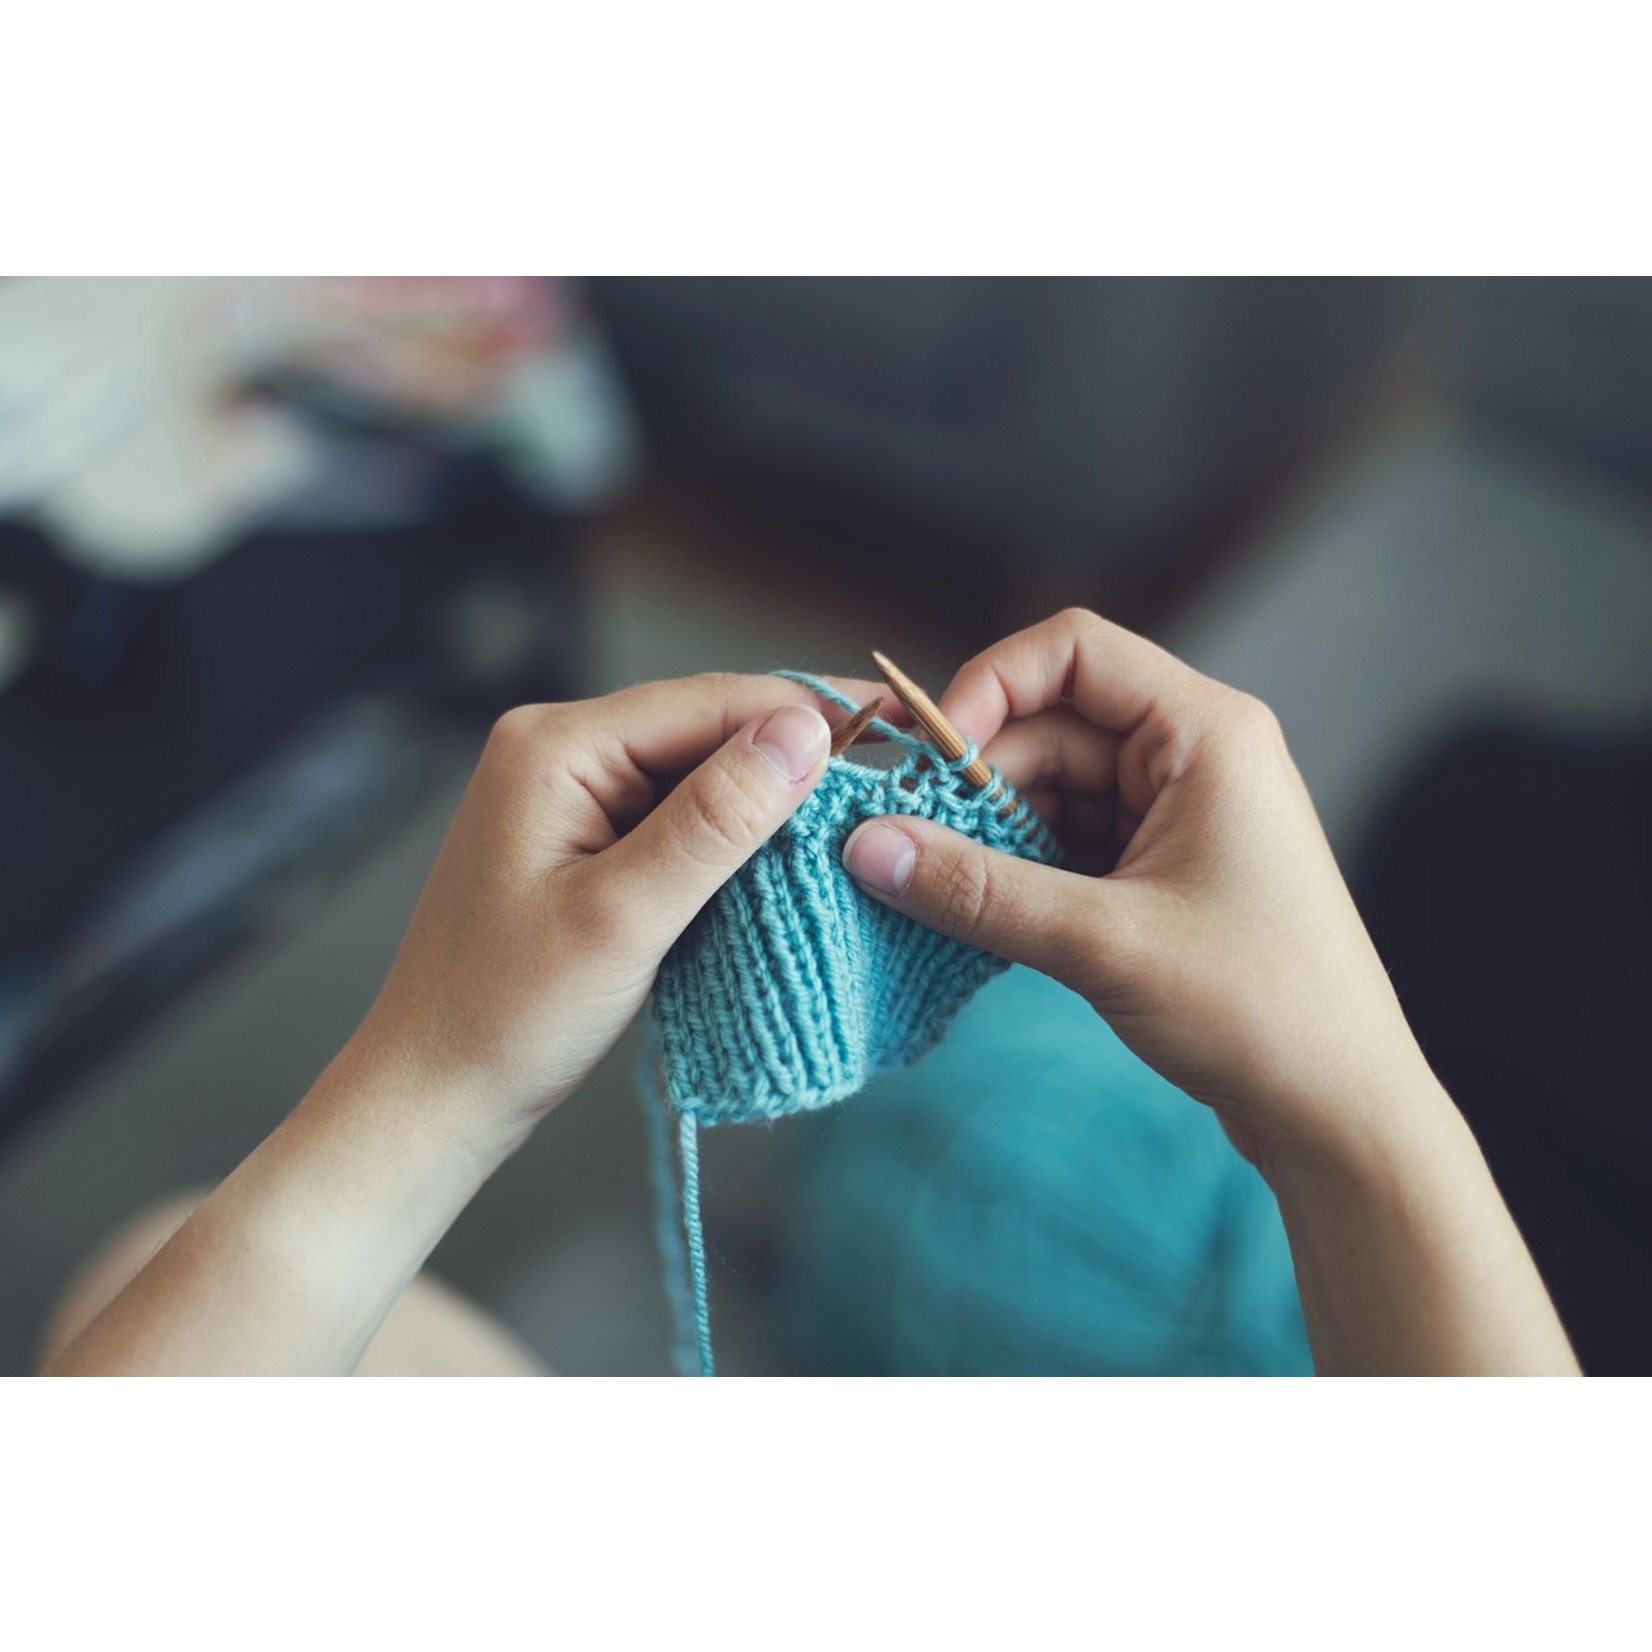 Beginner Knitting Class - In Person